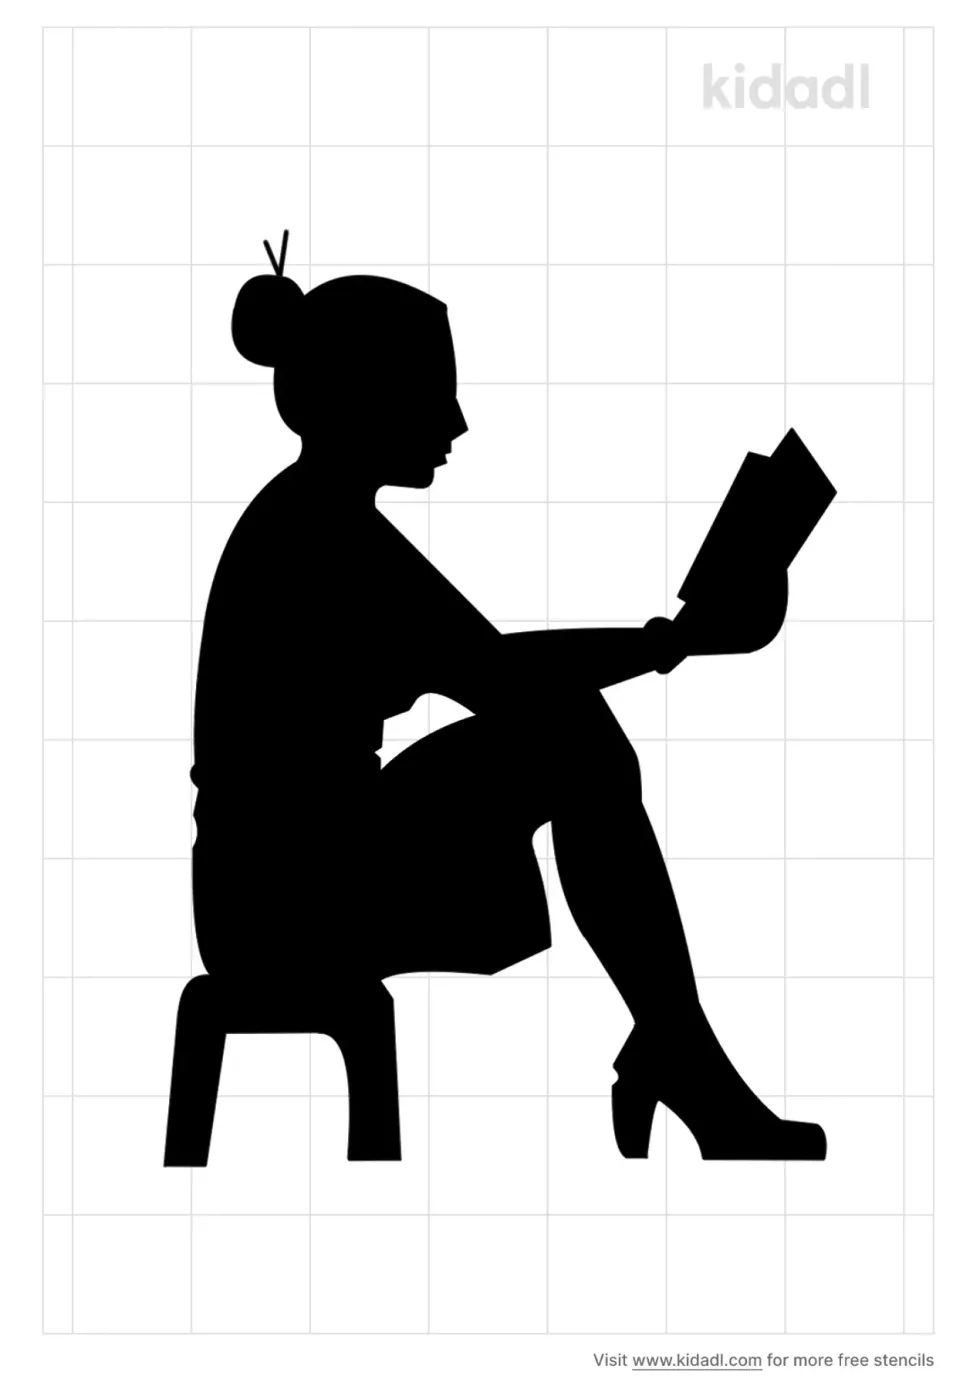 Lady Reading A Book Stencil